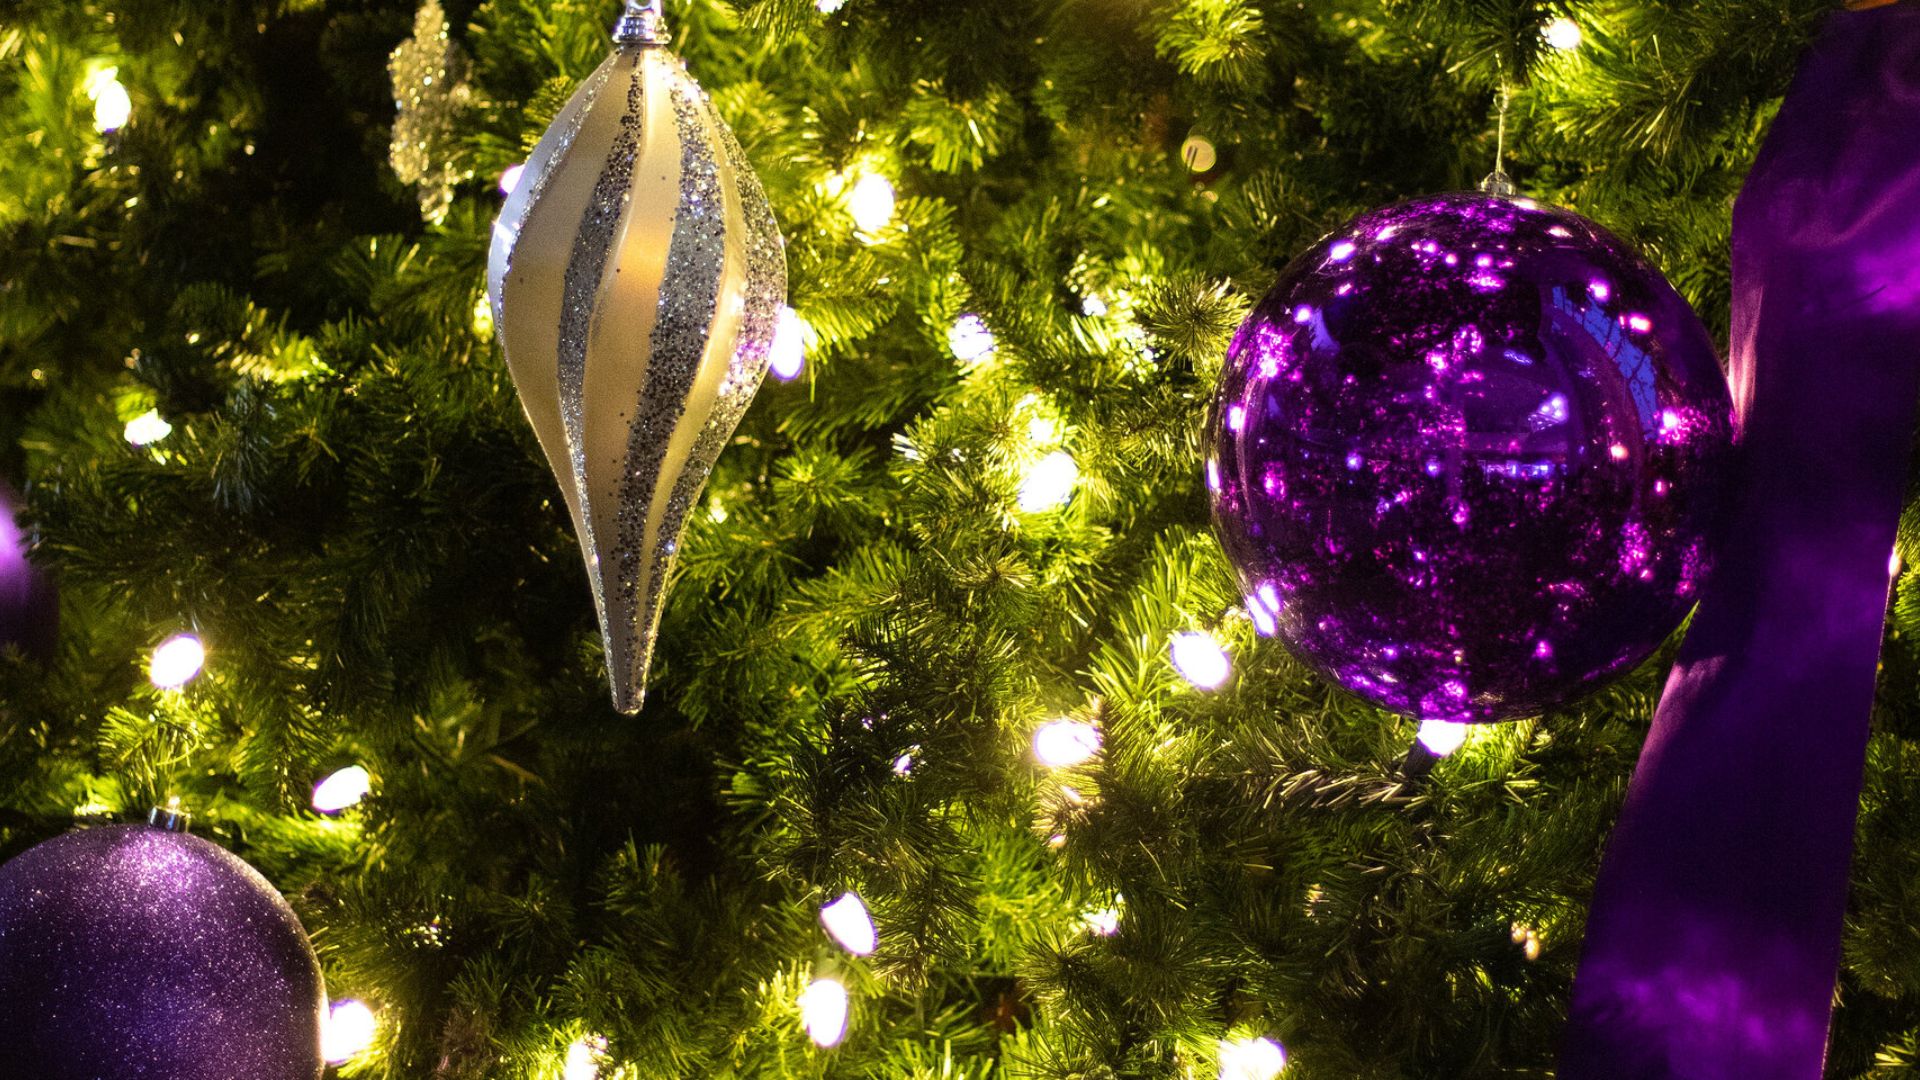 Close photo of purple ornaments on a Christmas tree